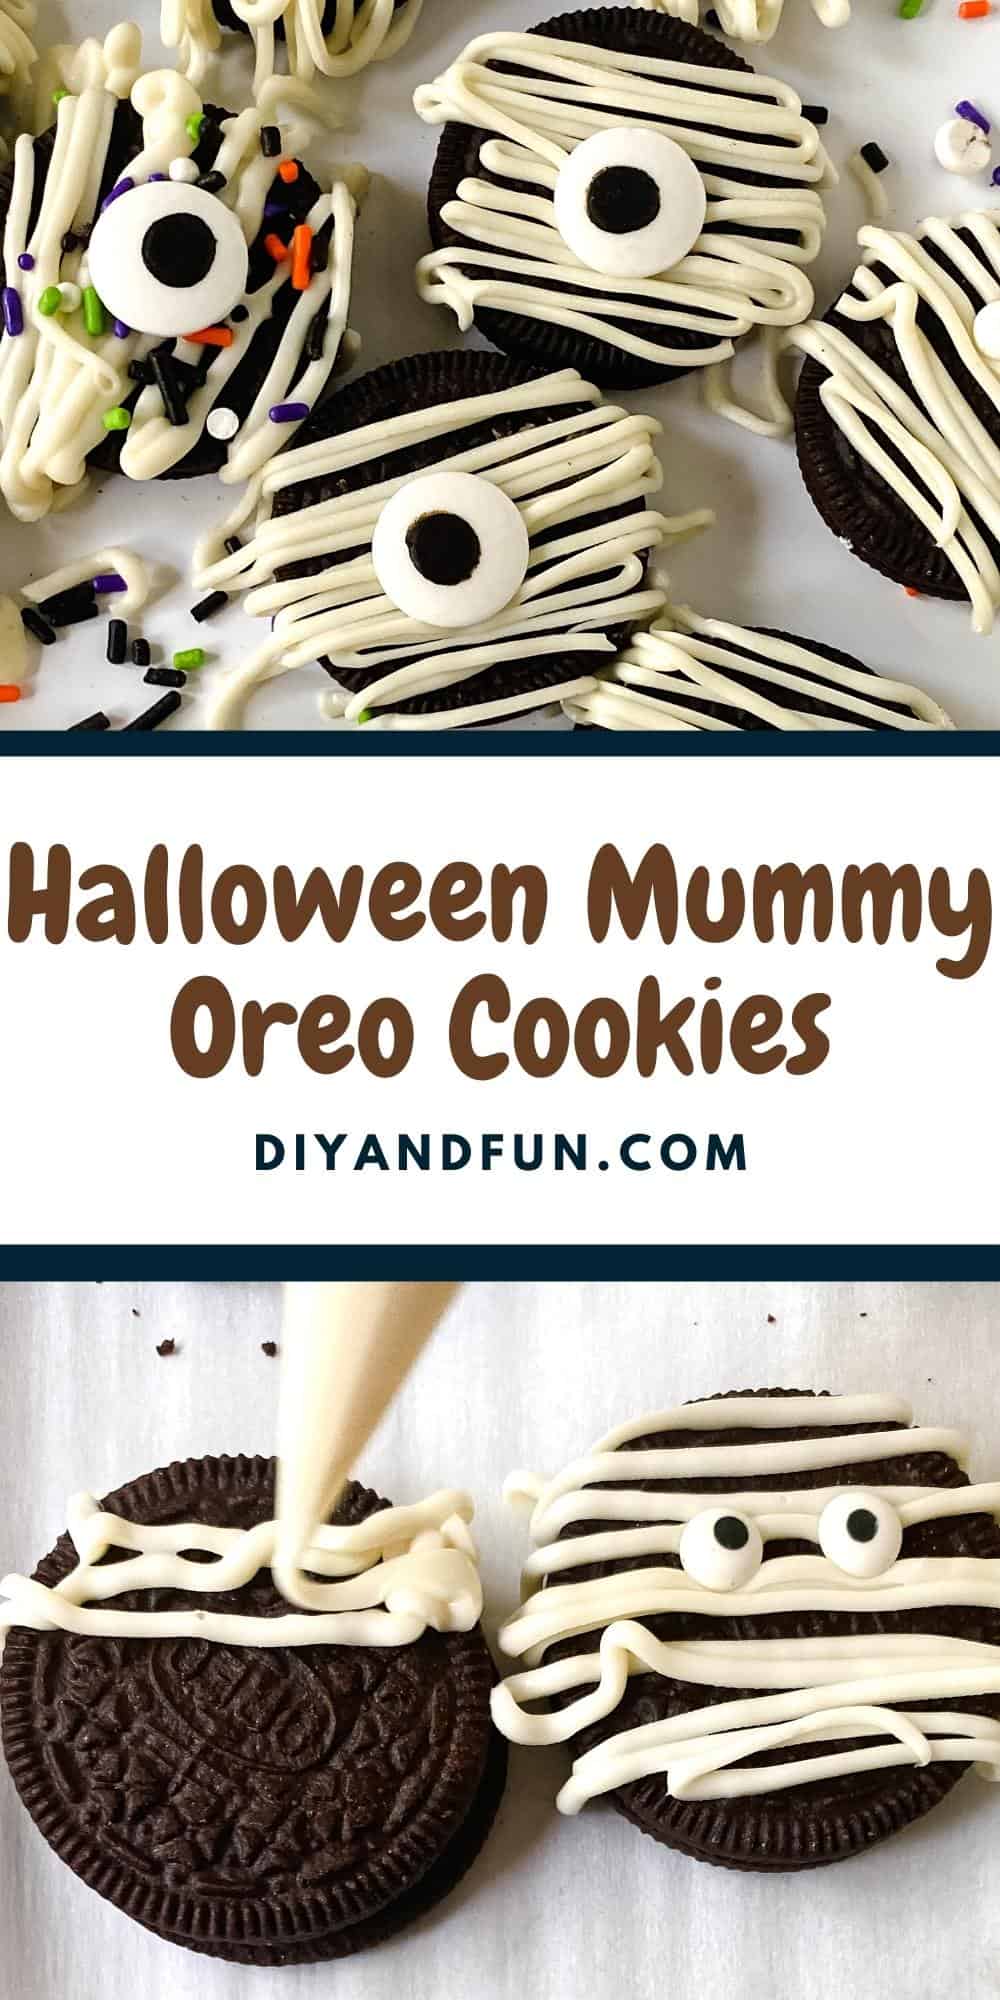 How to make Mummy Oreo Cookies